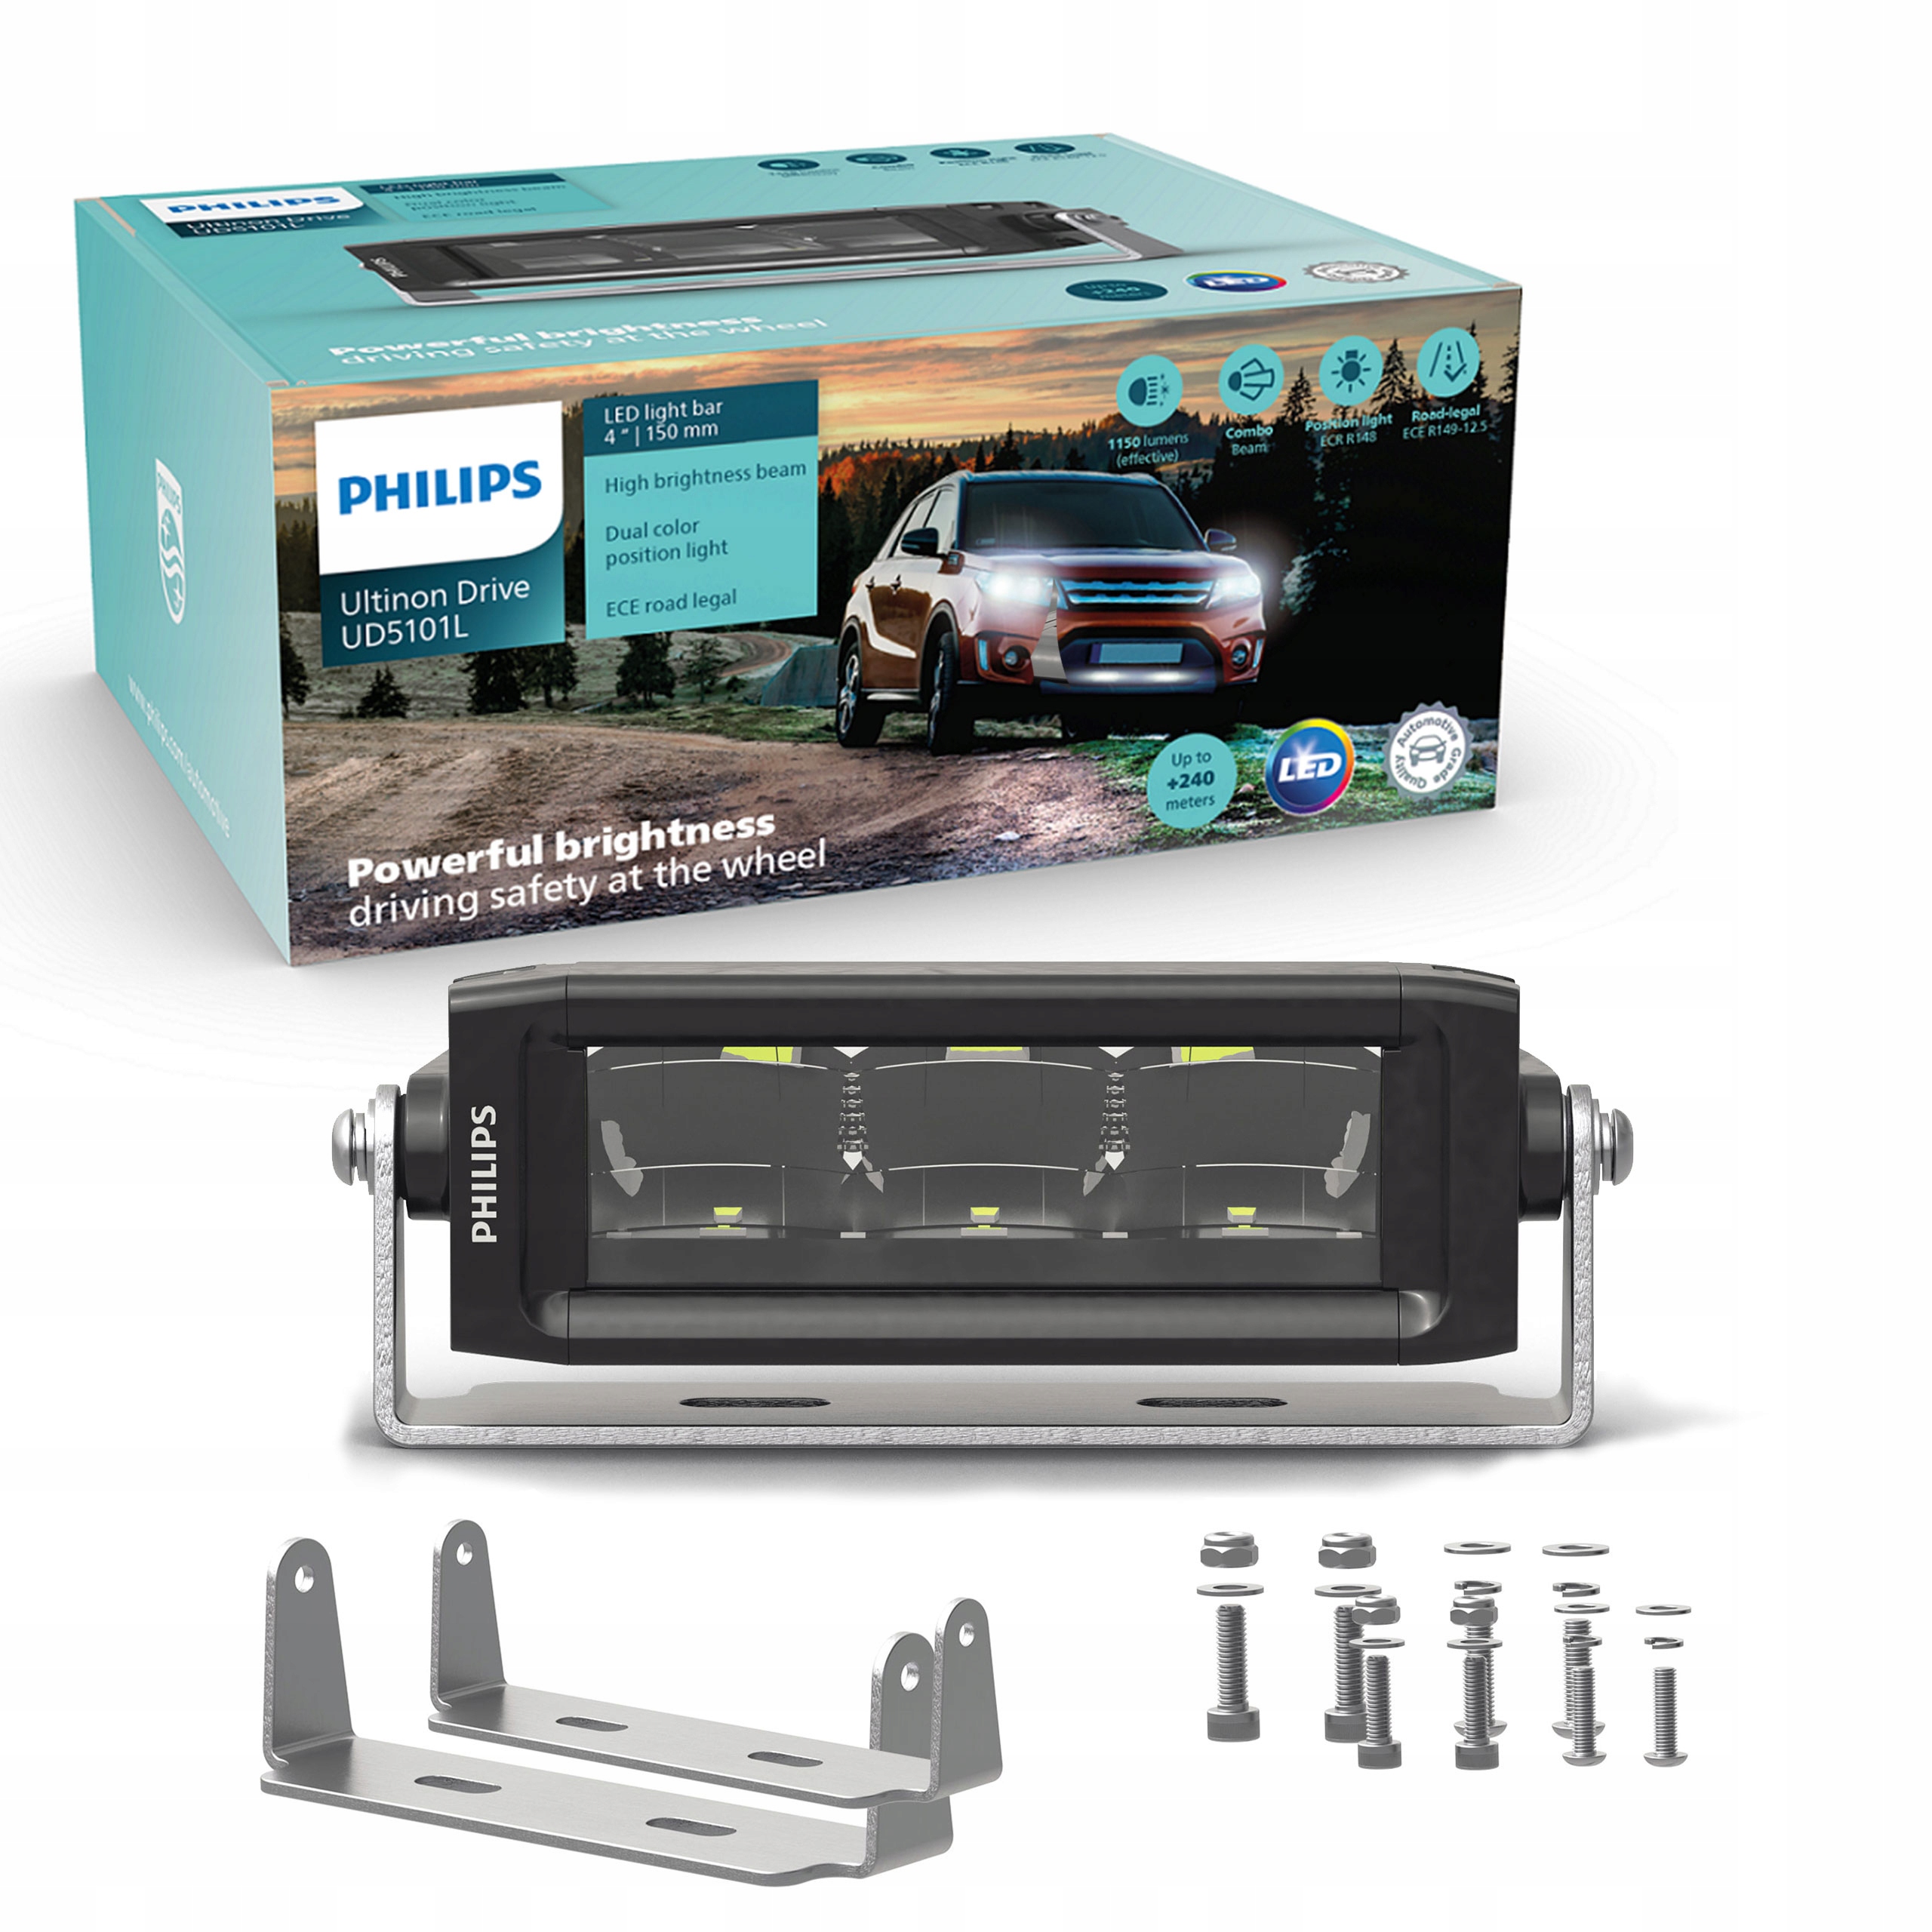 Svietidlo LEDLightbar Philips Ultinion Drive UD5001L